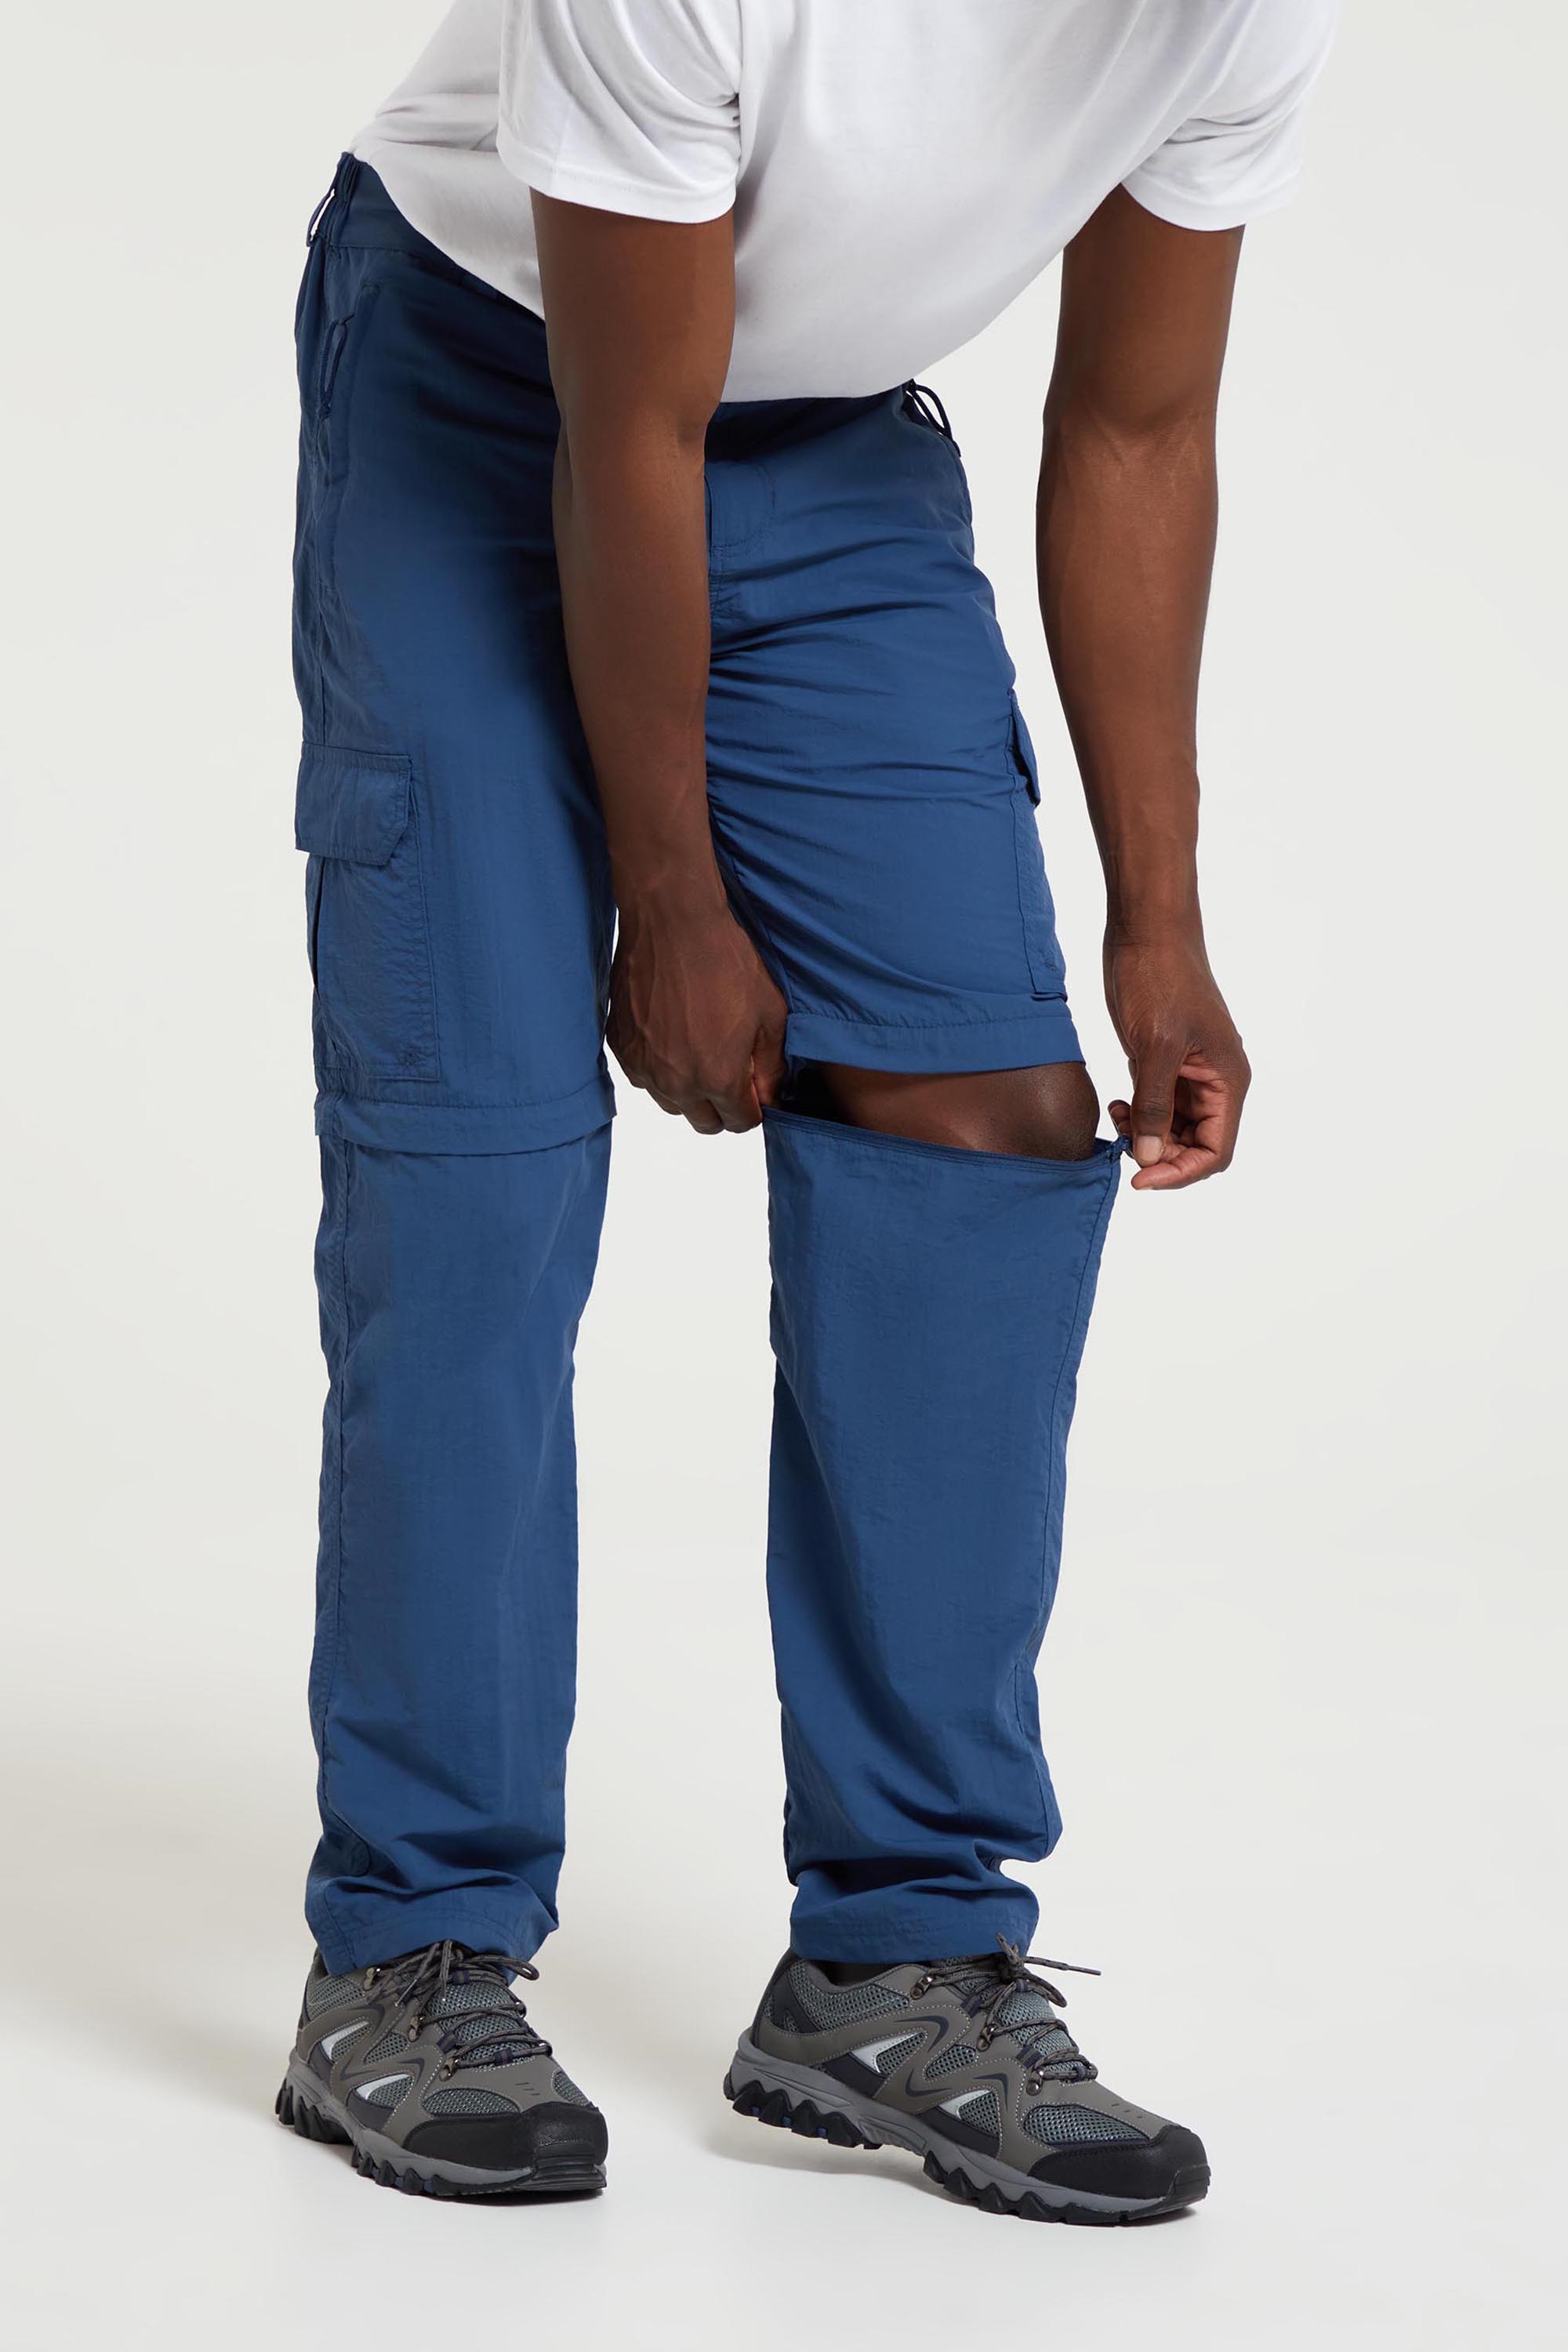 Men's Hiking Trousers Zip off Convertible Trousers Shorts Quick Dry Thin  Detachable Climbing Pants (Color : Khaki, Size : XXL) (Green 3XL) :  Amazon.co.uk: Fashion